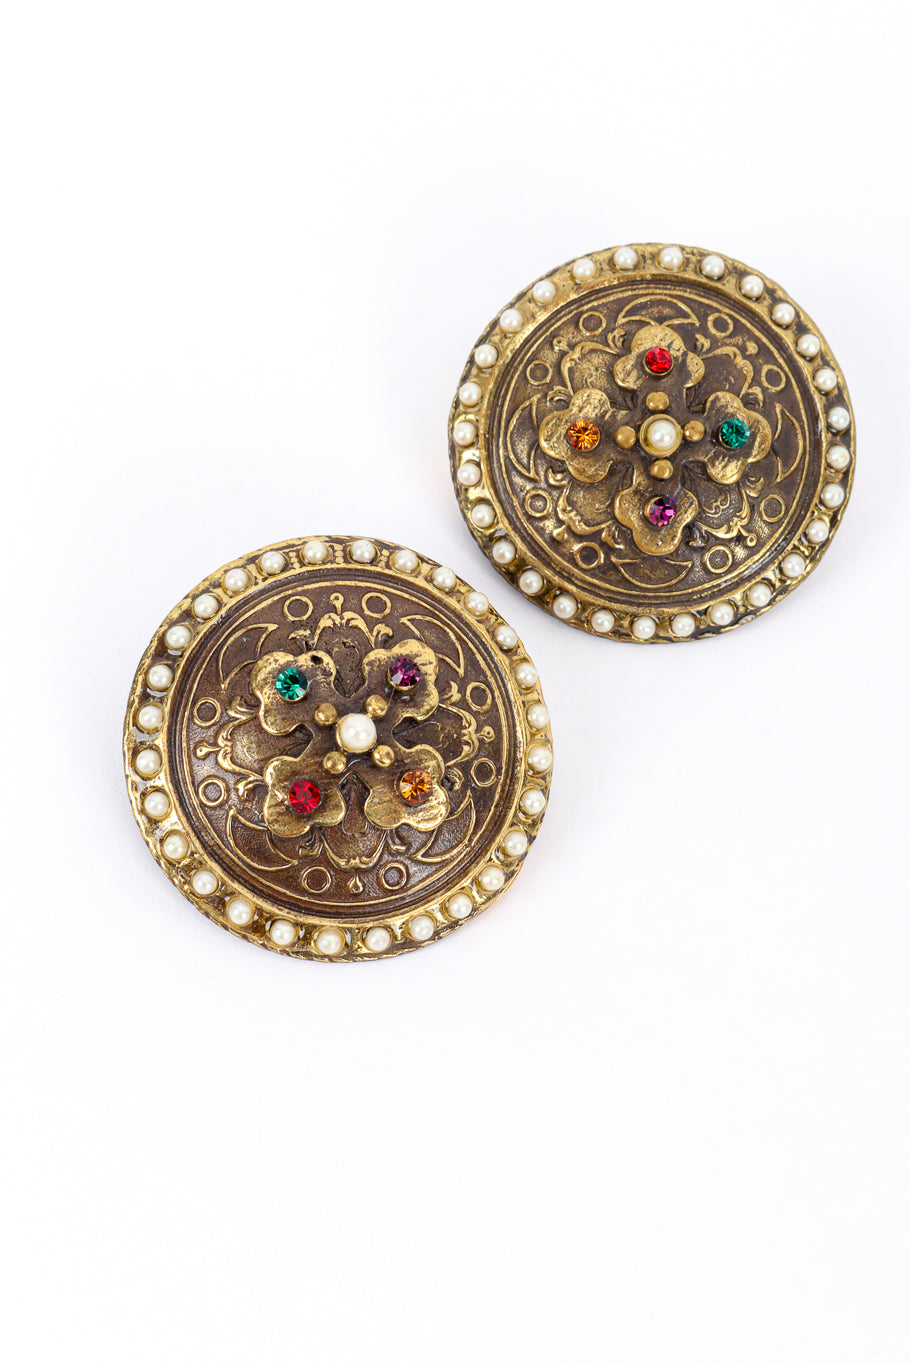 Vintage Il Gioiello Medallion Necklace, Bracelet and Earring Set earring front @recess la